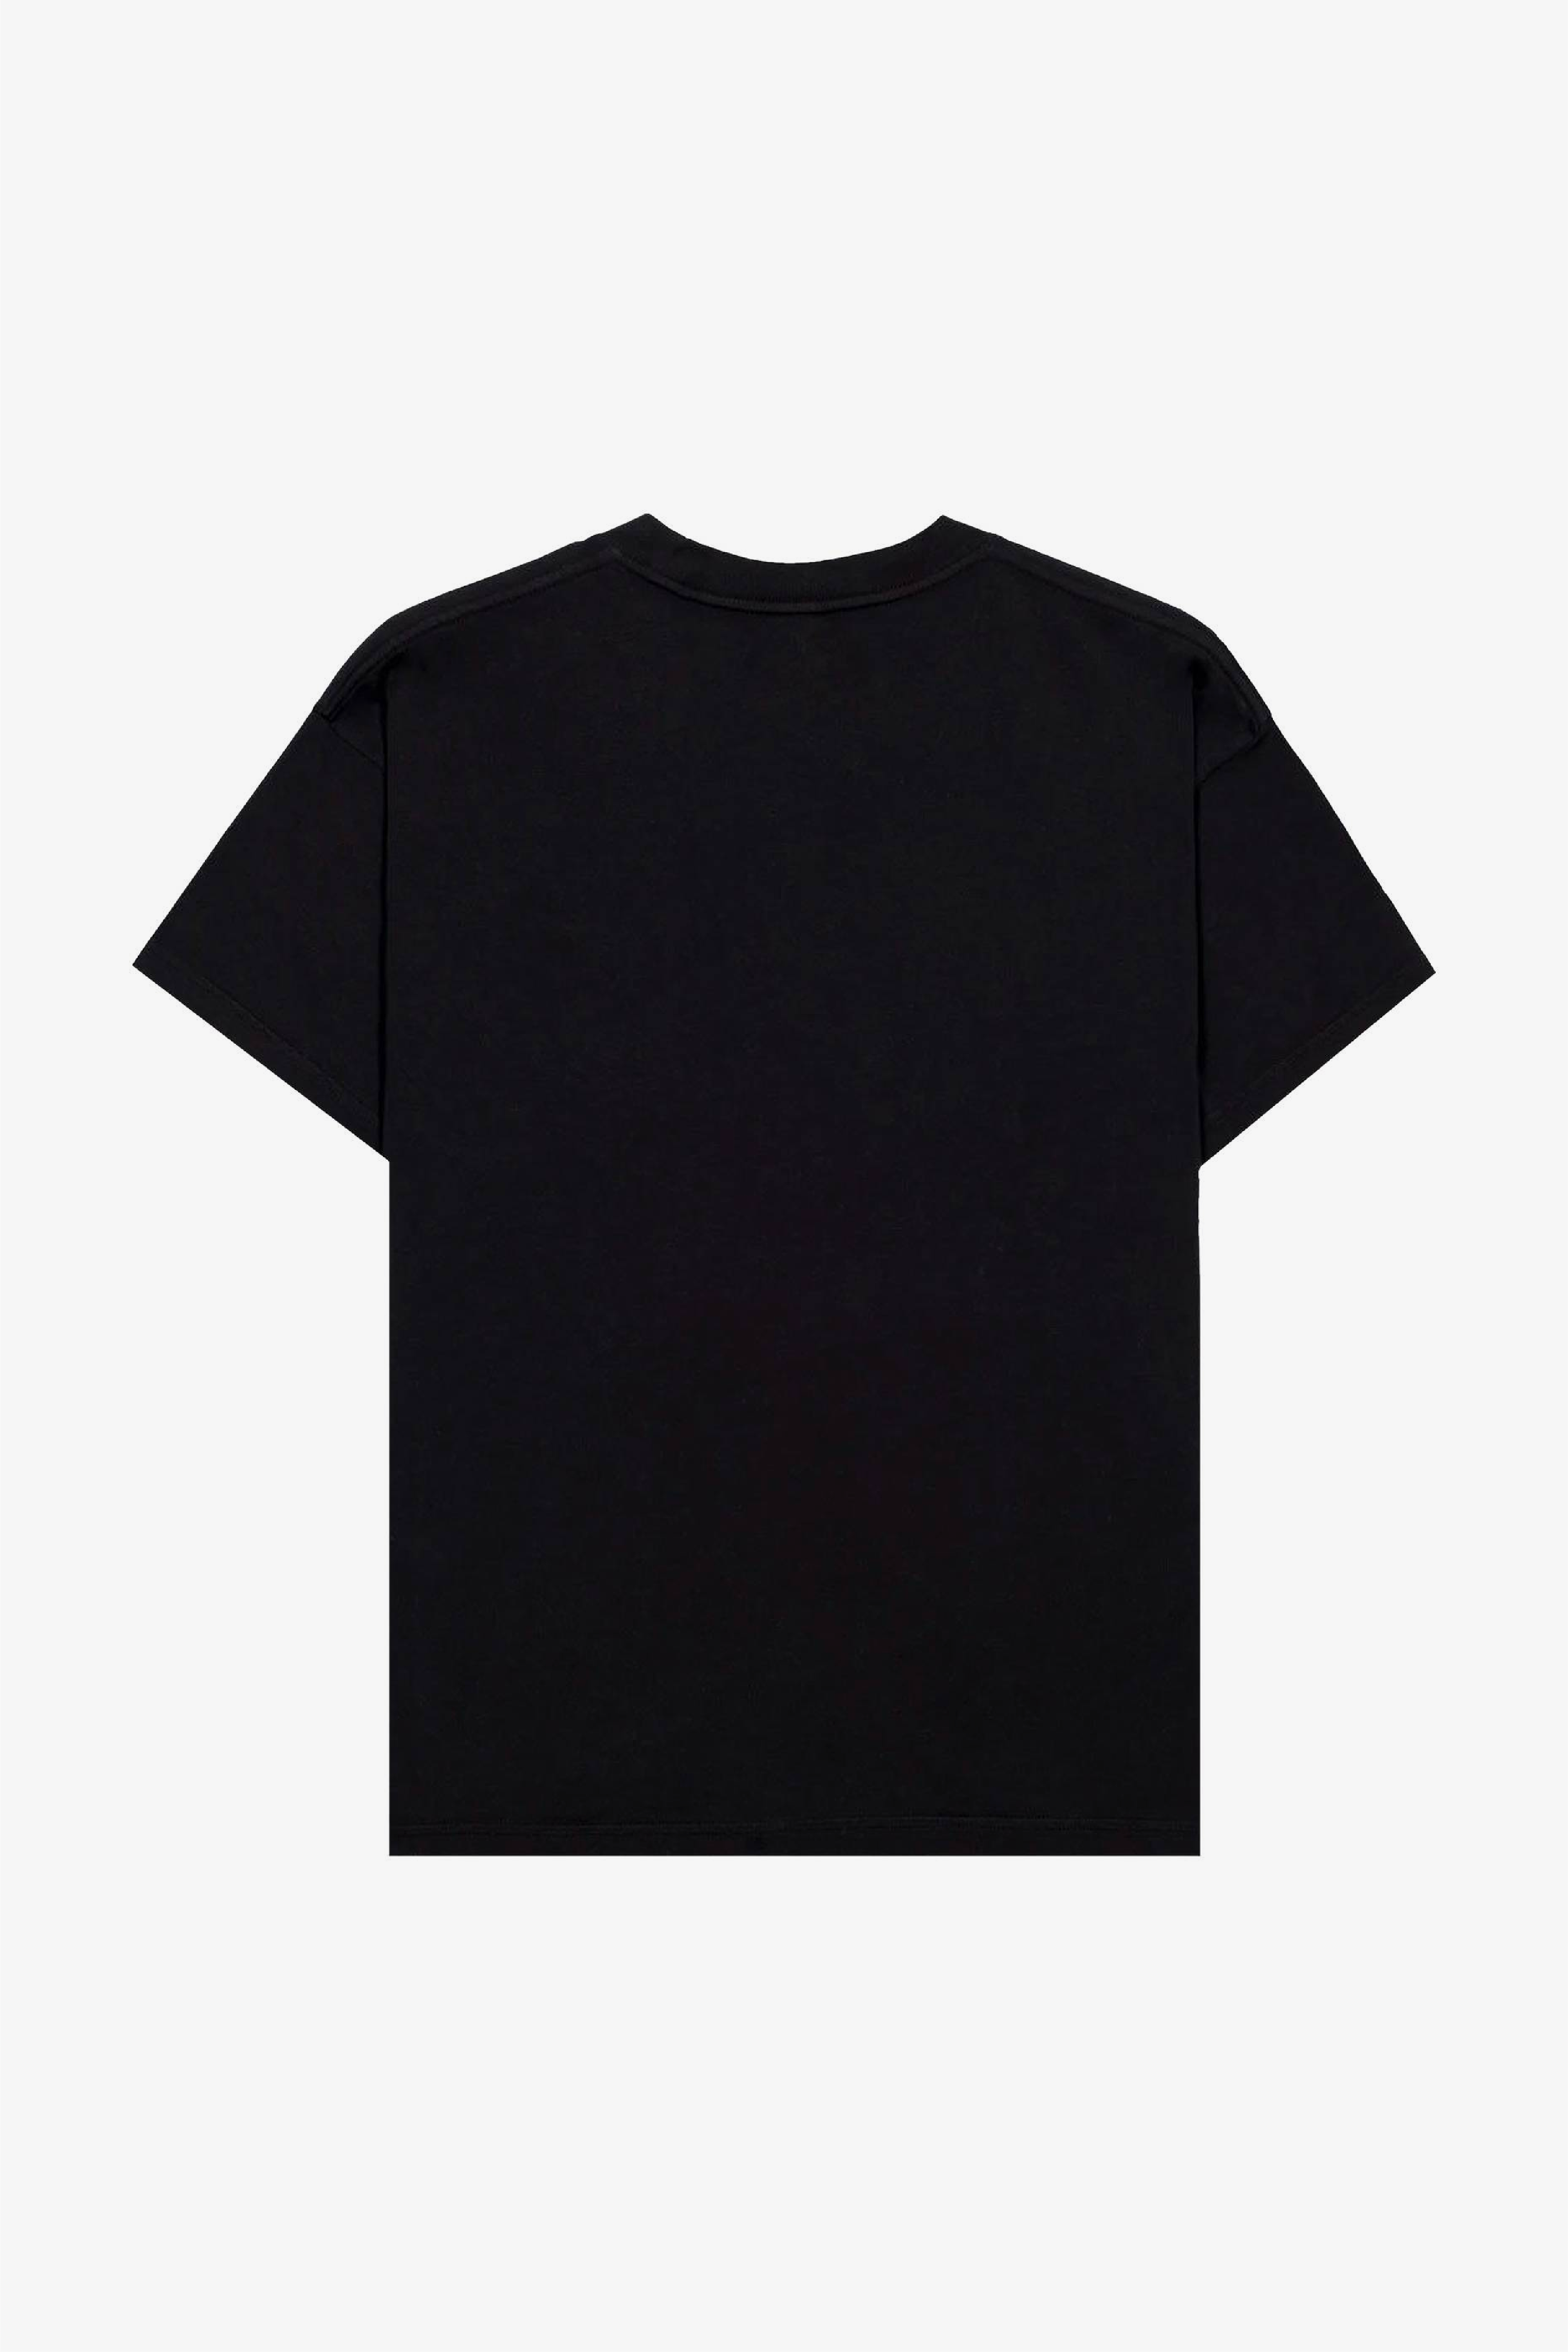 Selectshop FRAME - BRAIN DEAD Kogans Revenge Tee T-Shirts Dubai